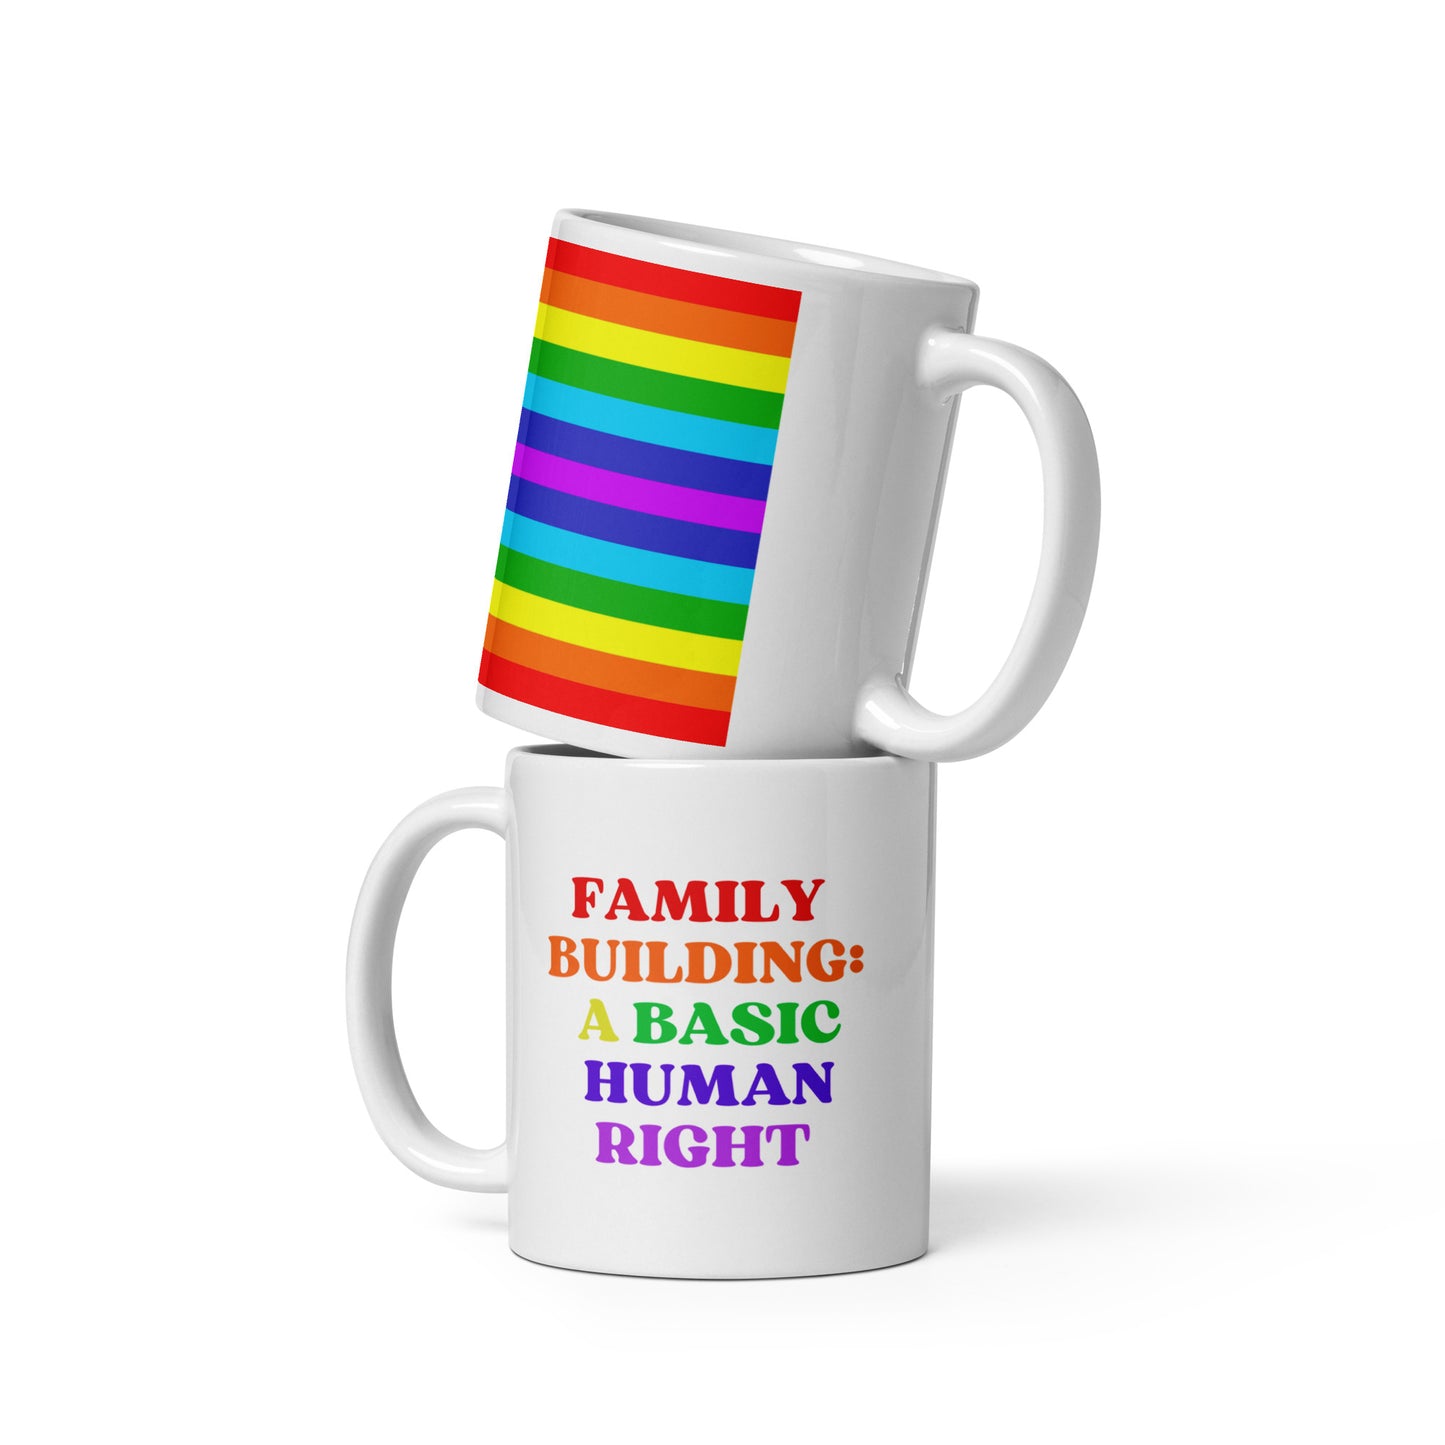 Family Building: A Basic Human Right White Glossy Mug 11 oz